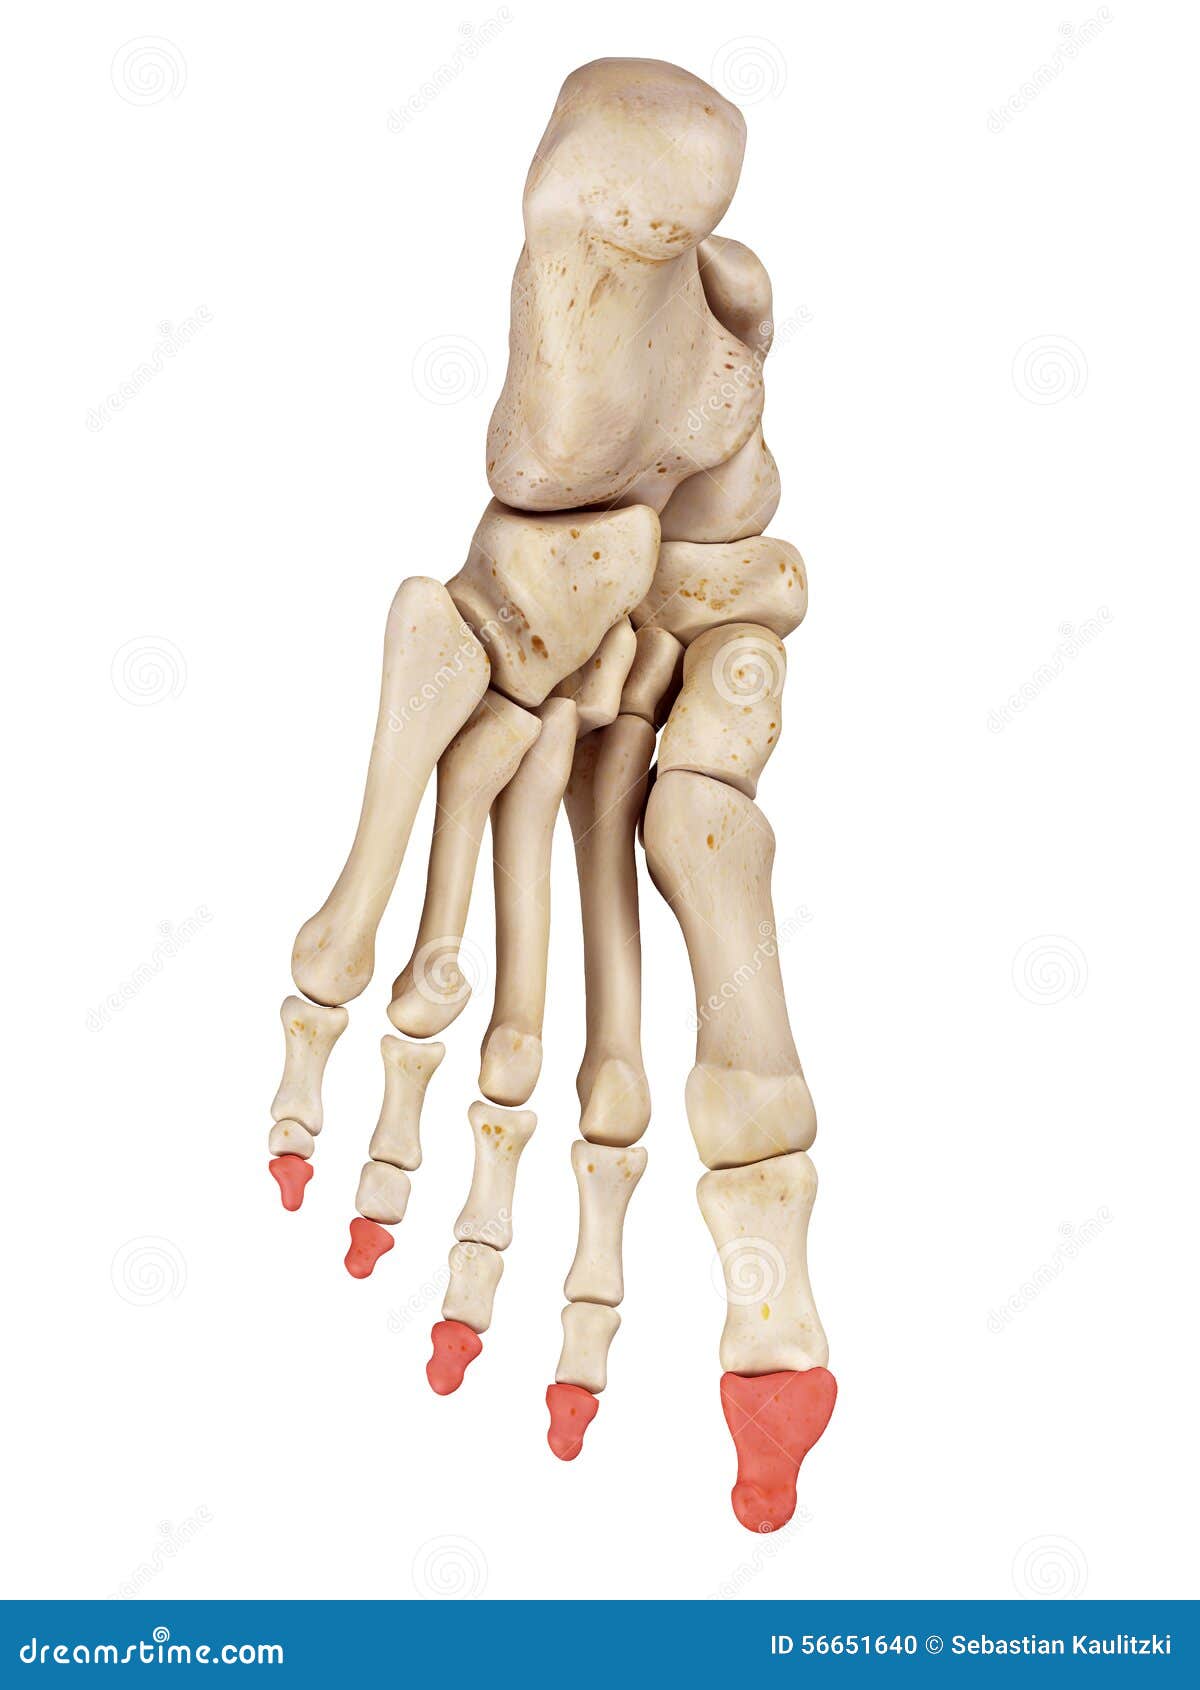 the distal phalanx bones